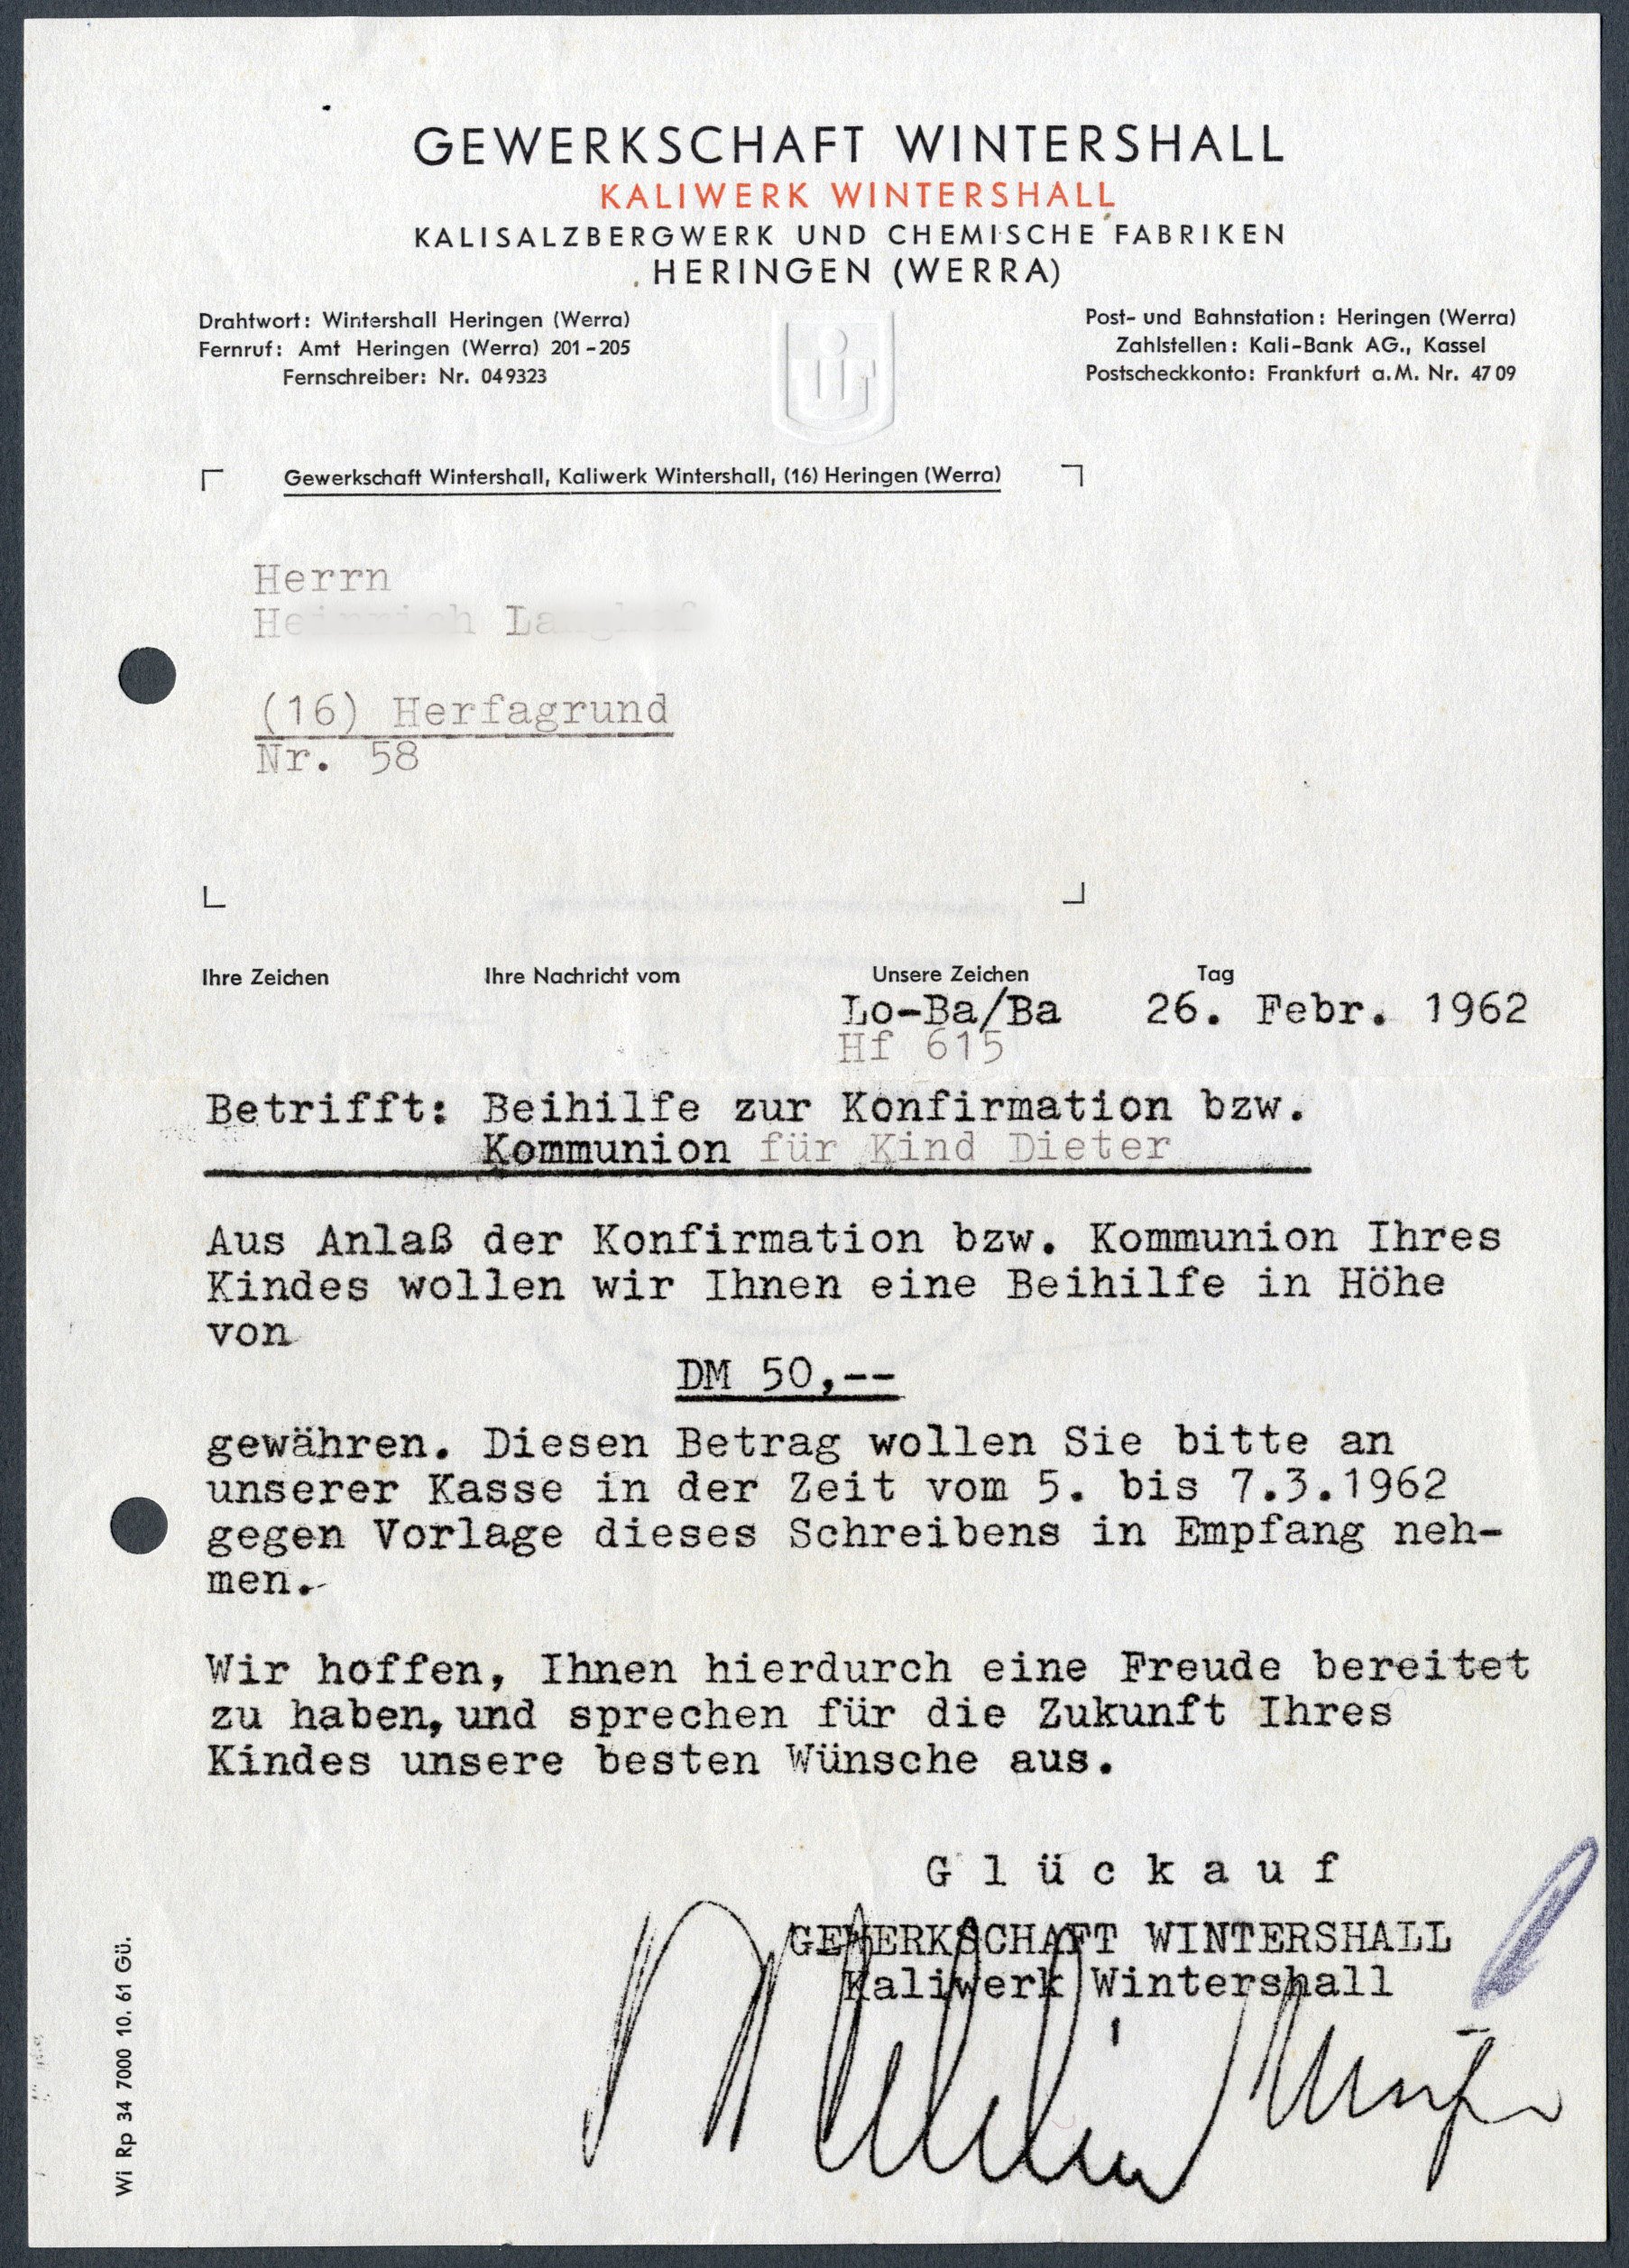 Werksbeihilfe zur Konfirmation (Werra-Kalibergbau-Museum, Heringen/W. CC BY-NC-SA)